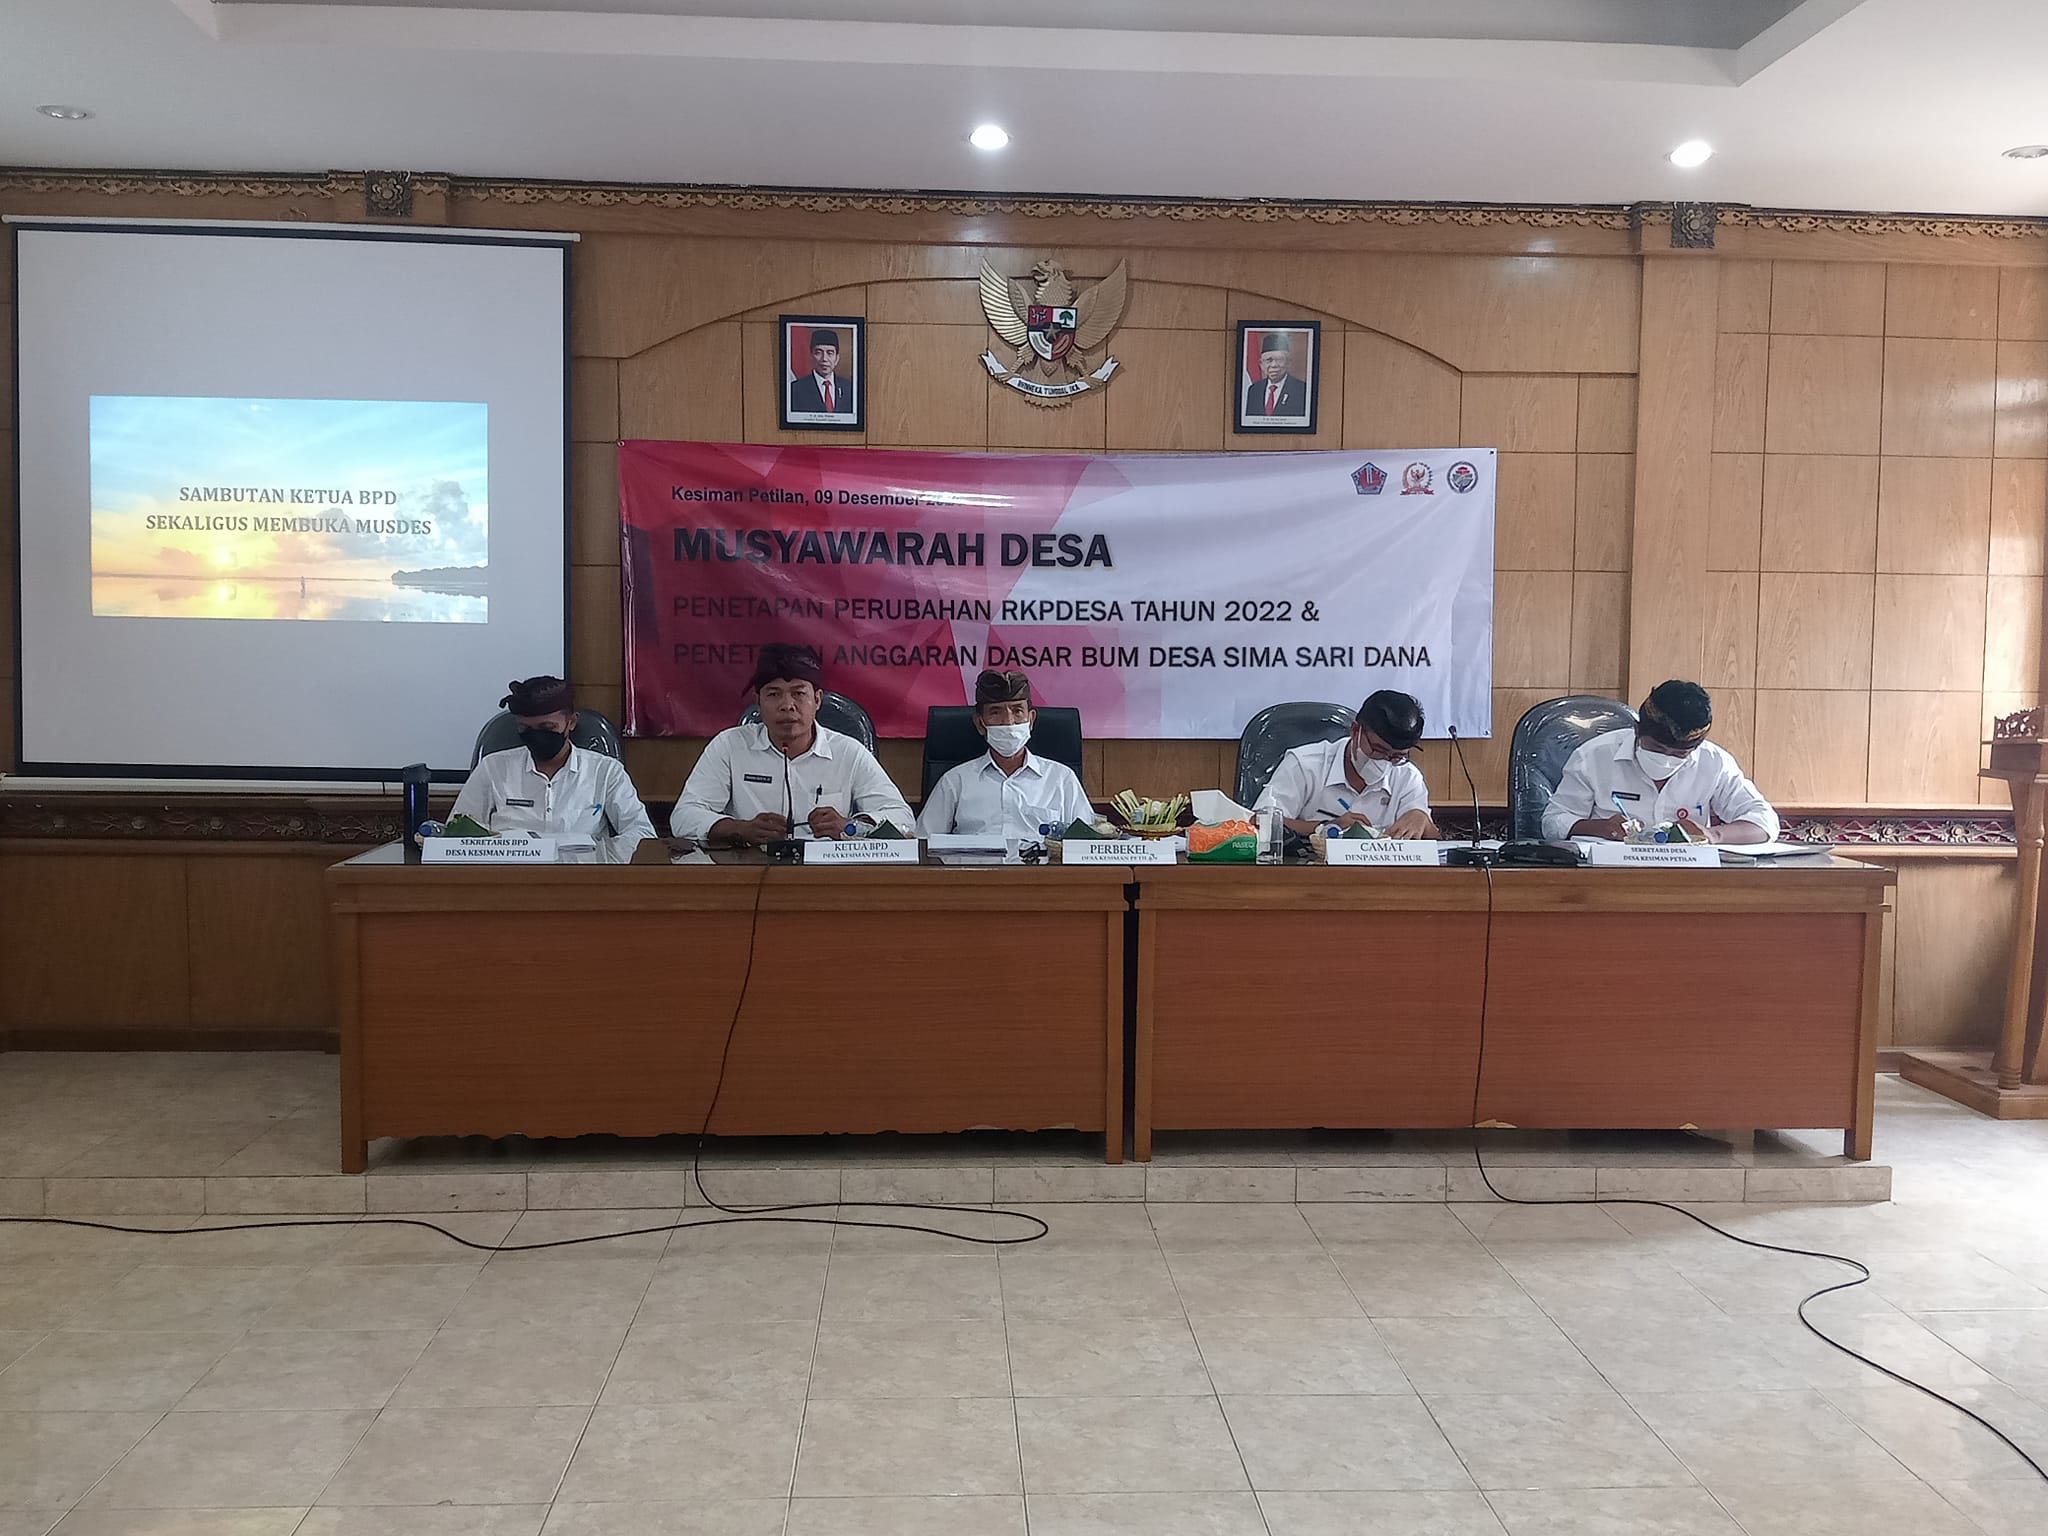 Musdes Penetapan Perubahan RKP Desa dan Penetapan Anggaran Dasar BUM Desa Sima Sari Dana